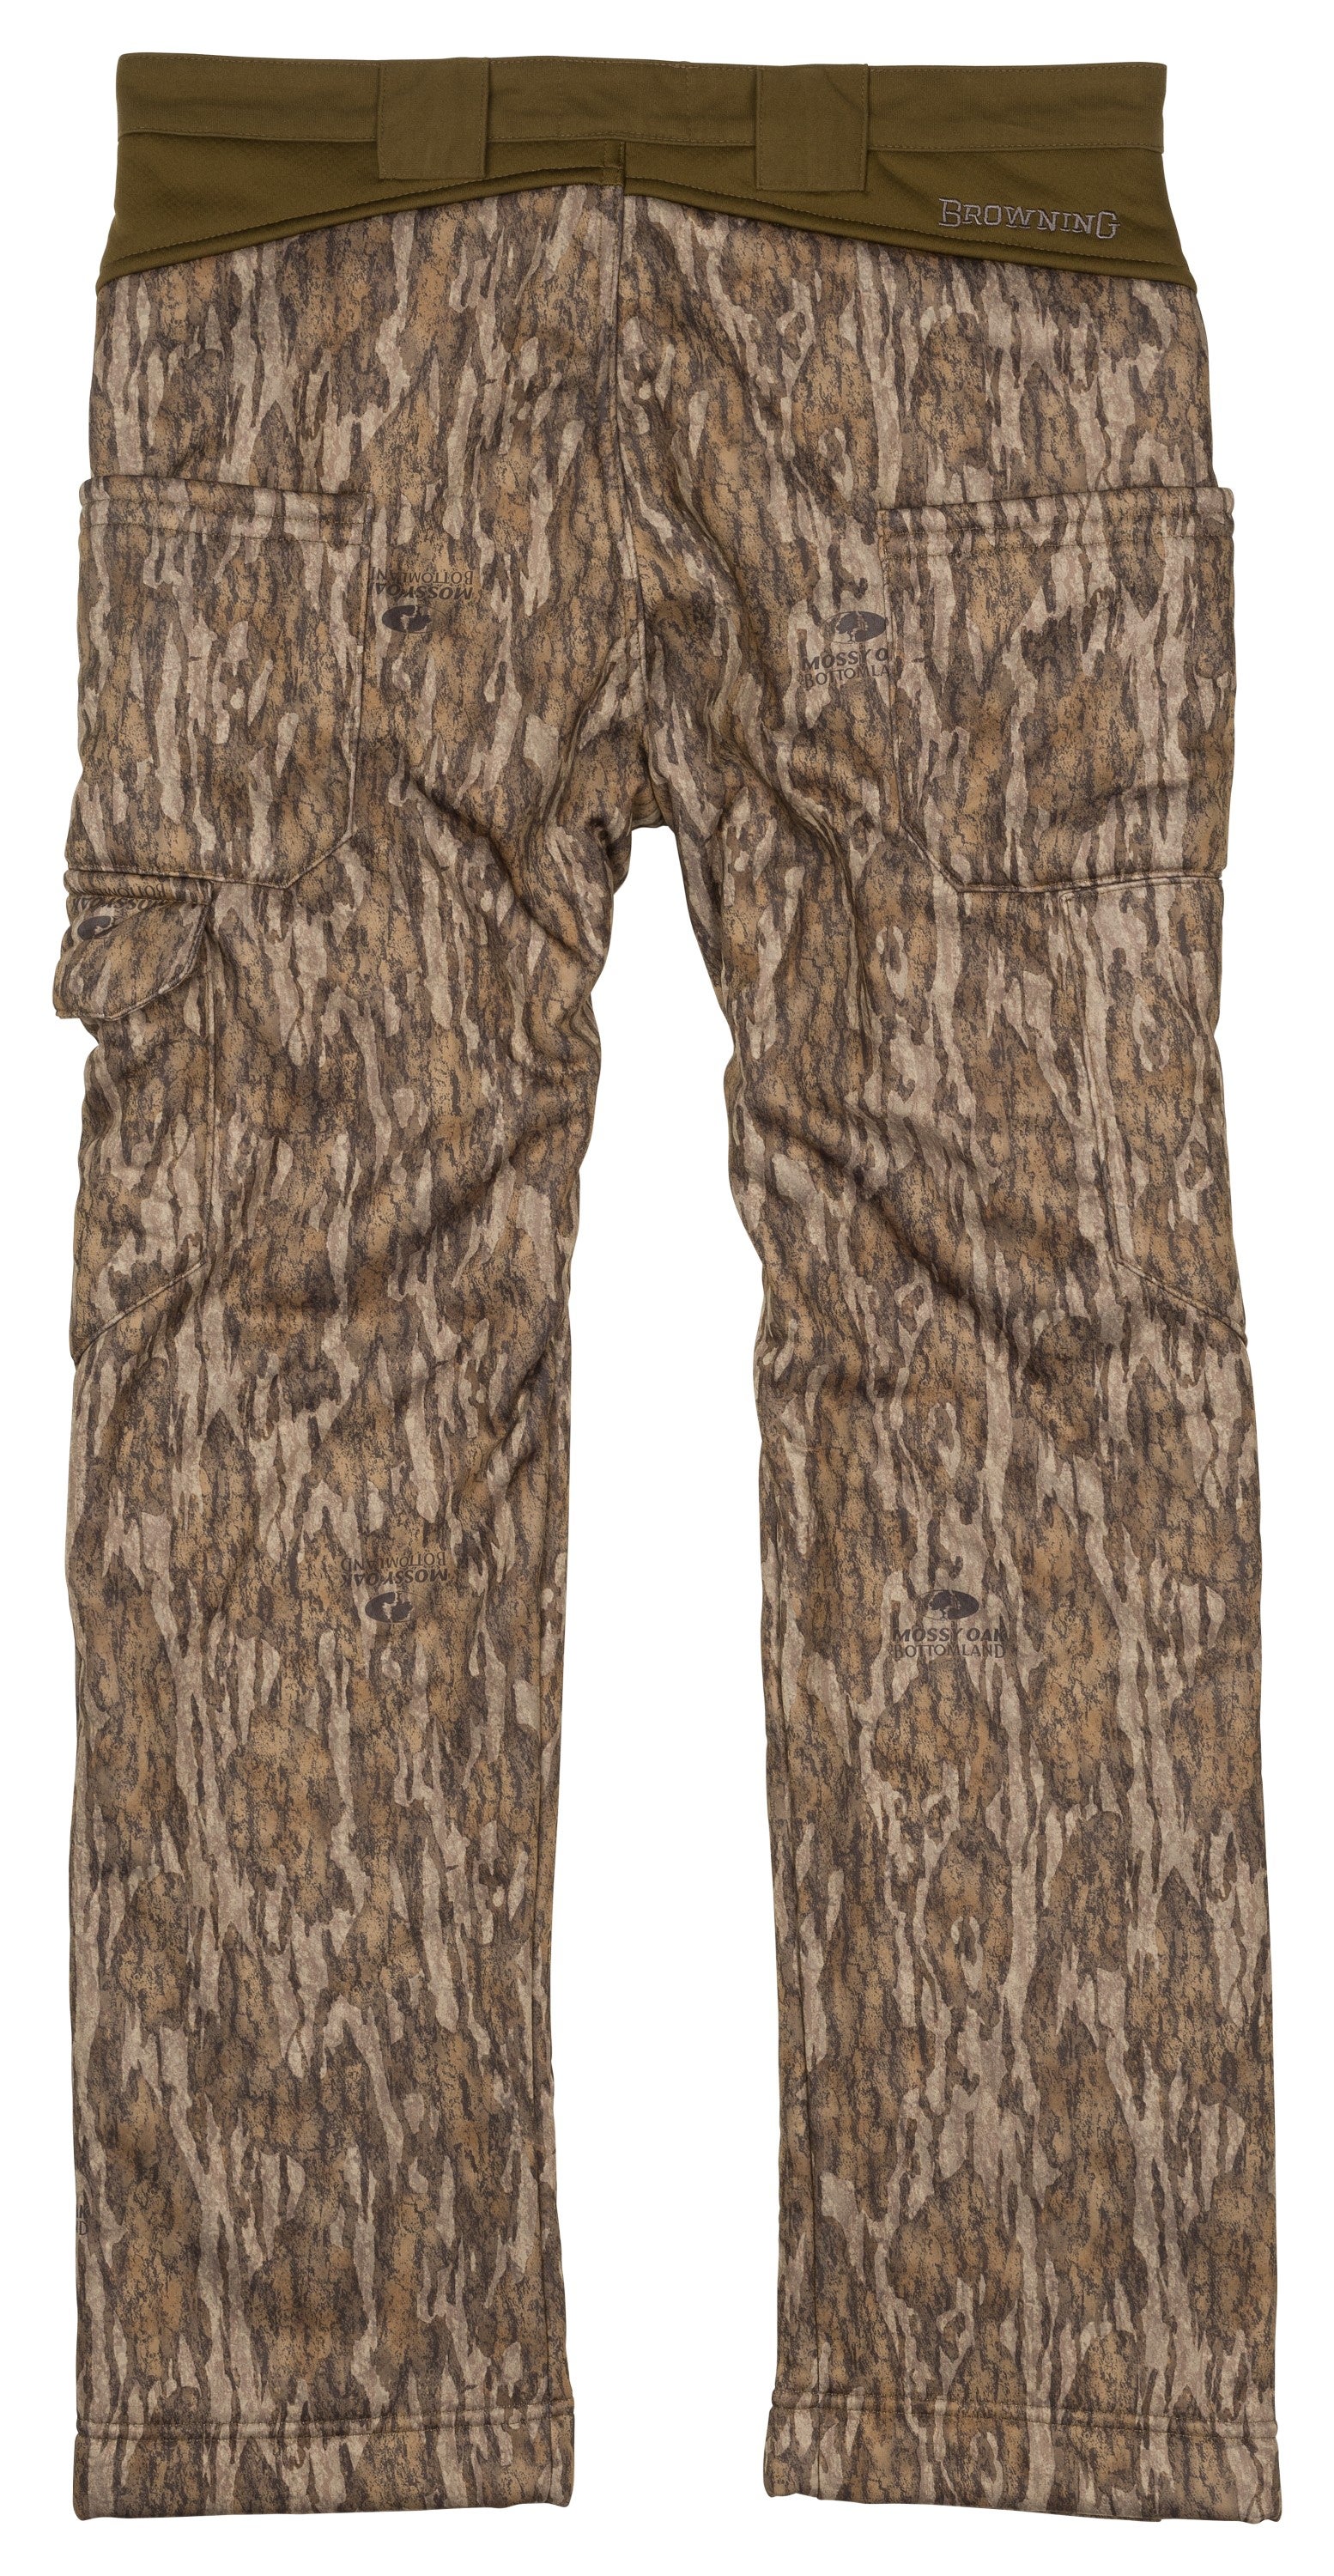 High Pile Pant - Hunting Clothing - Browning